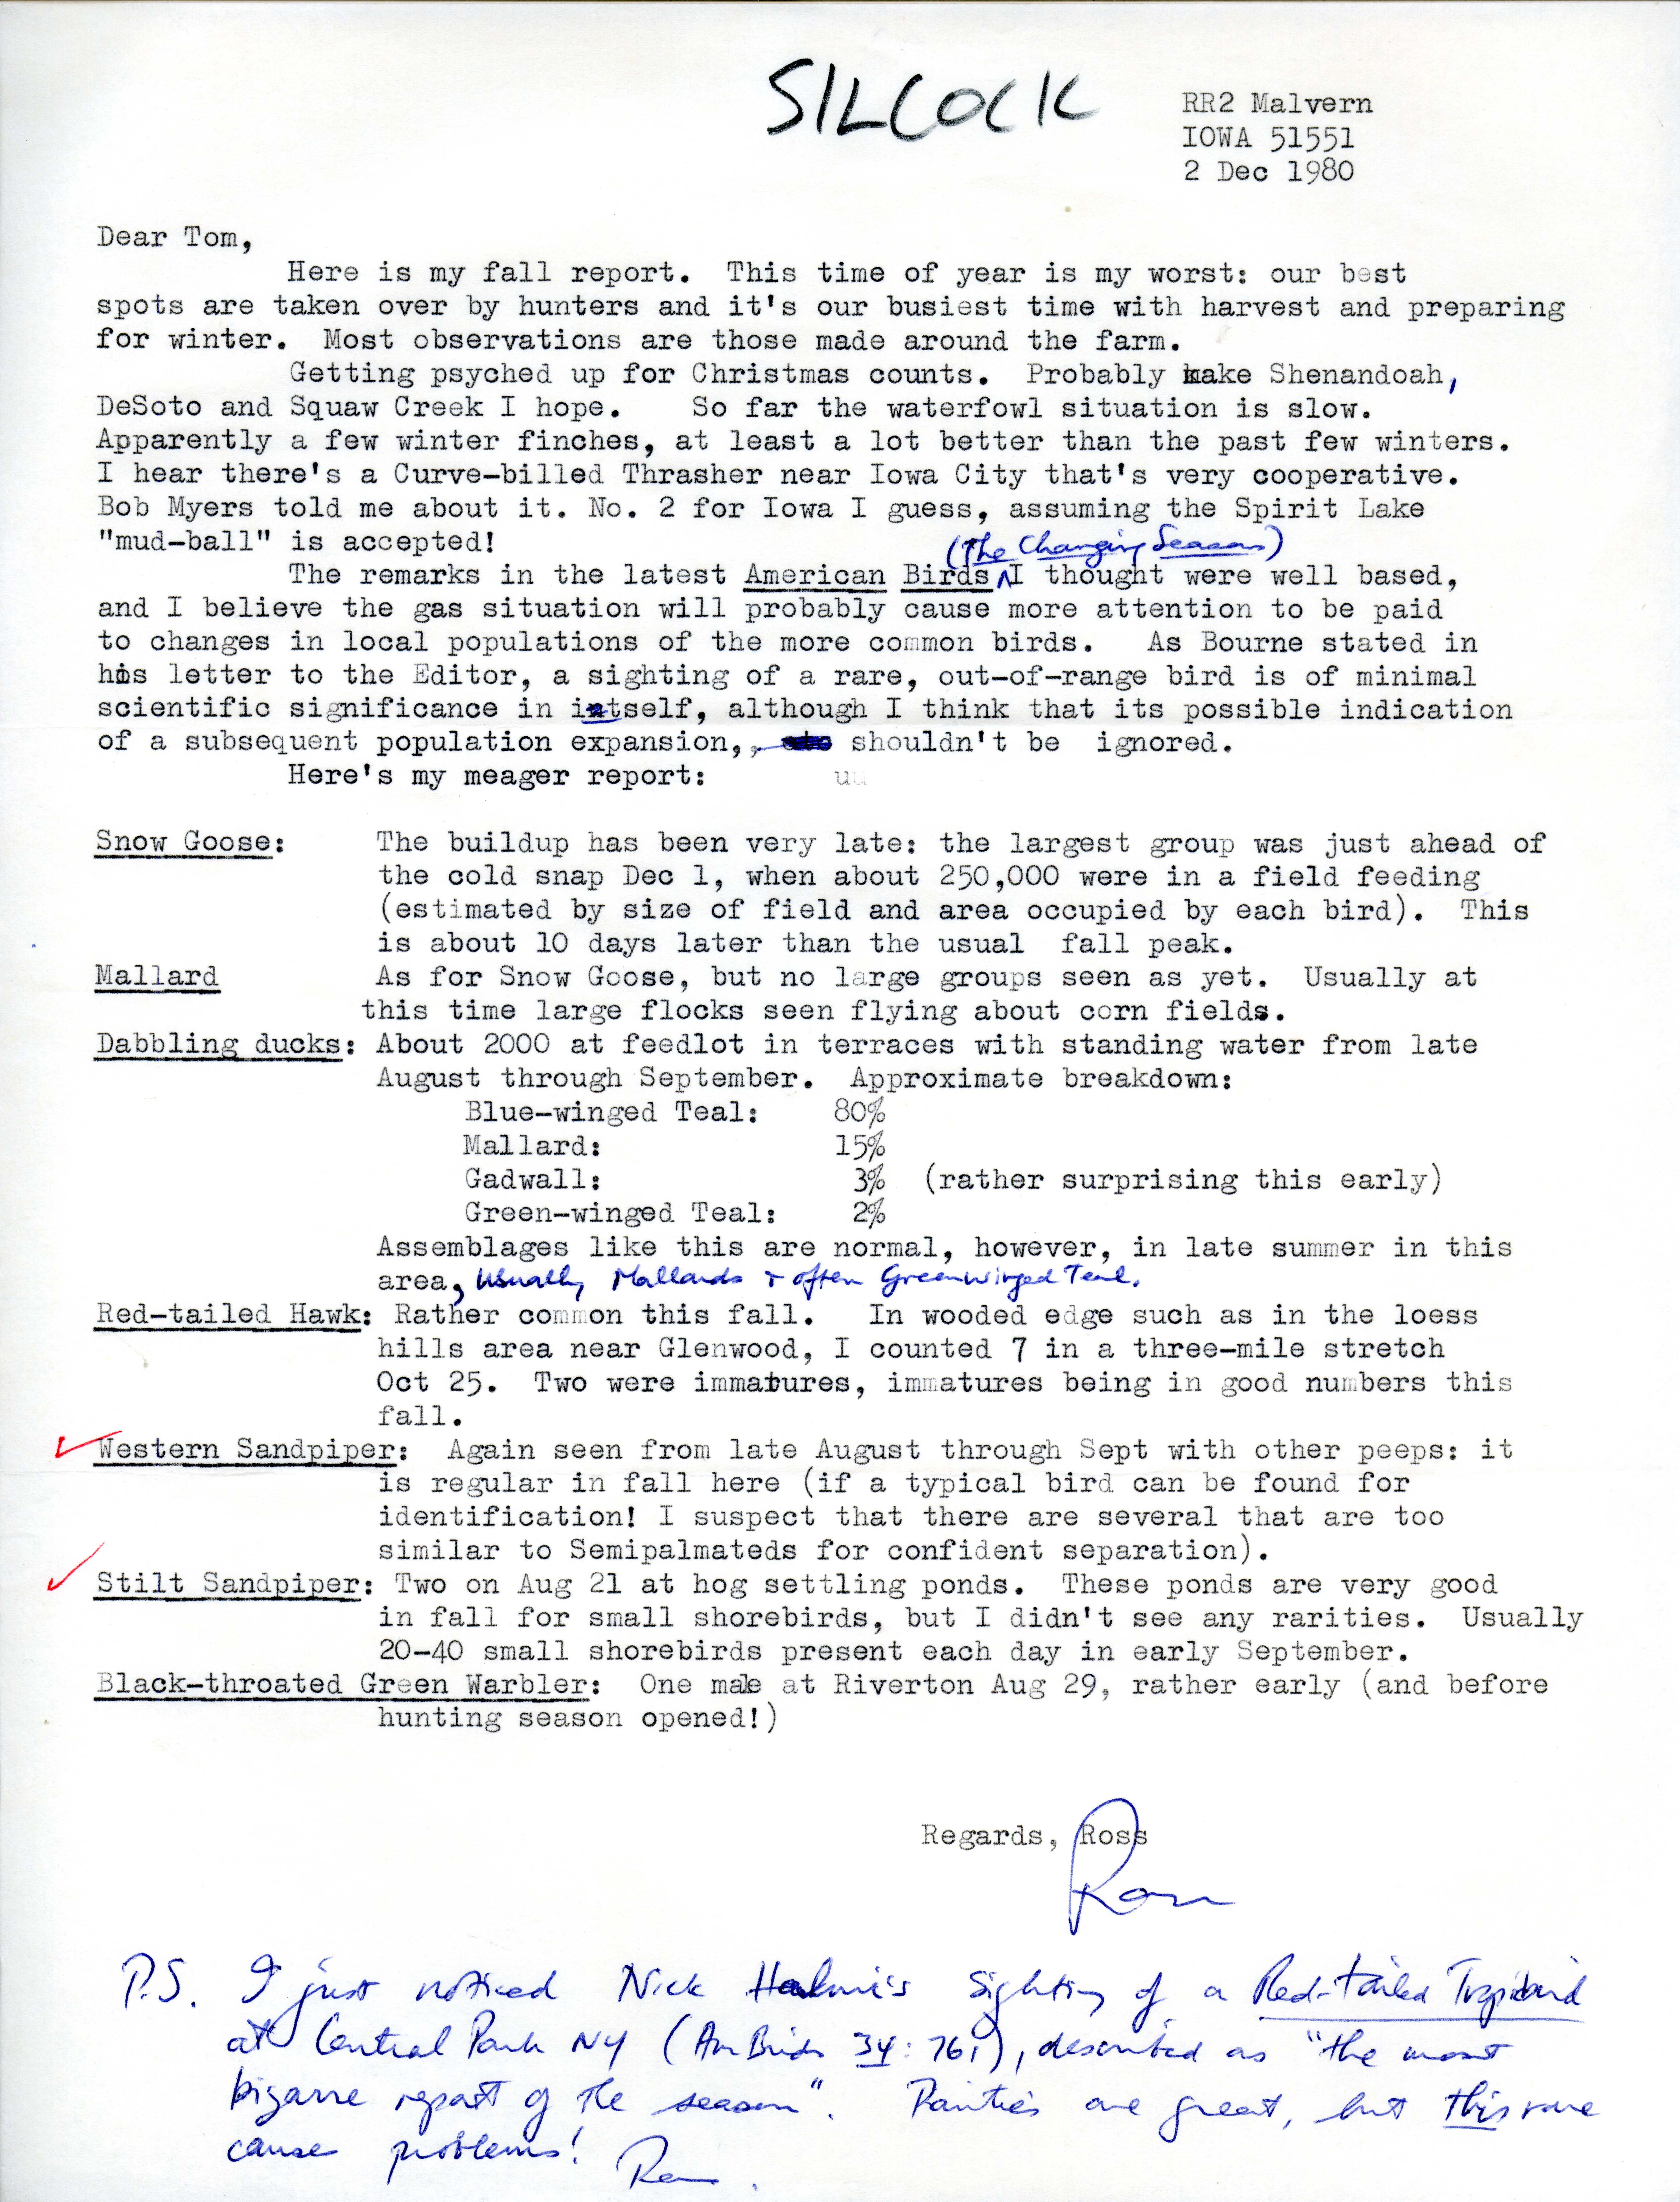 Ross Silcock letter to Thomas Kent regarding his fall report, December 2, 1980